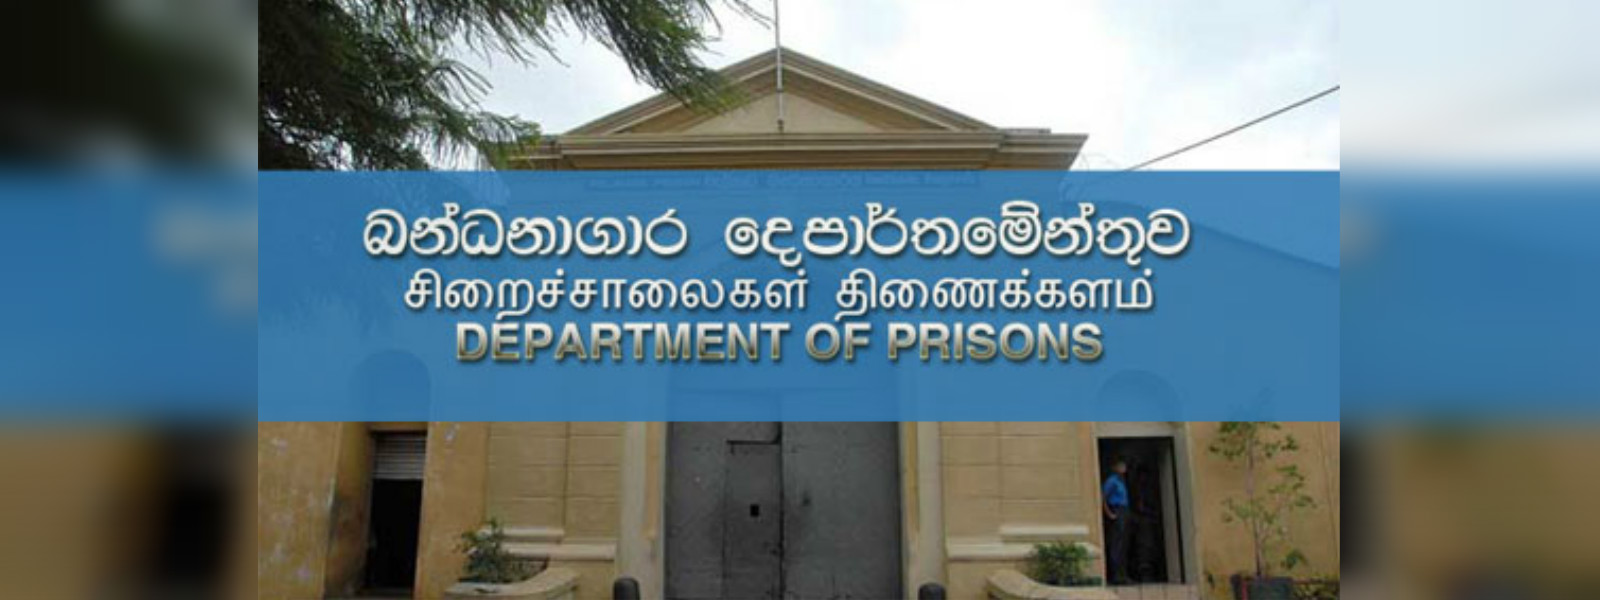 President requested to pardon prisoners serving long sentences